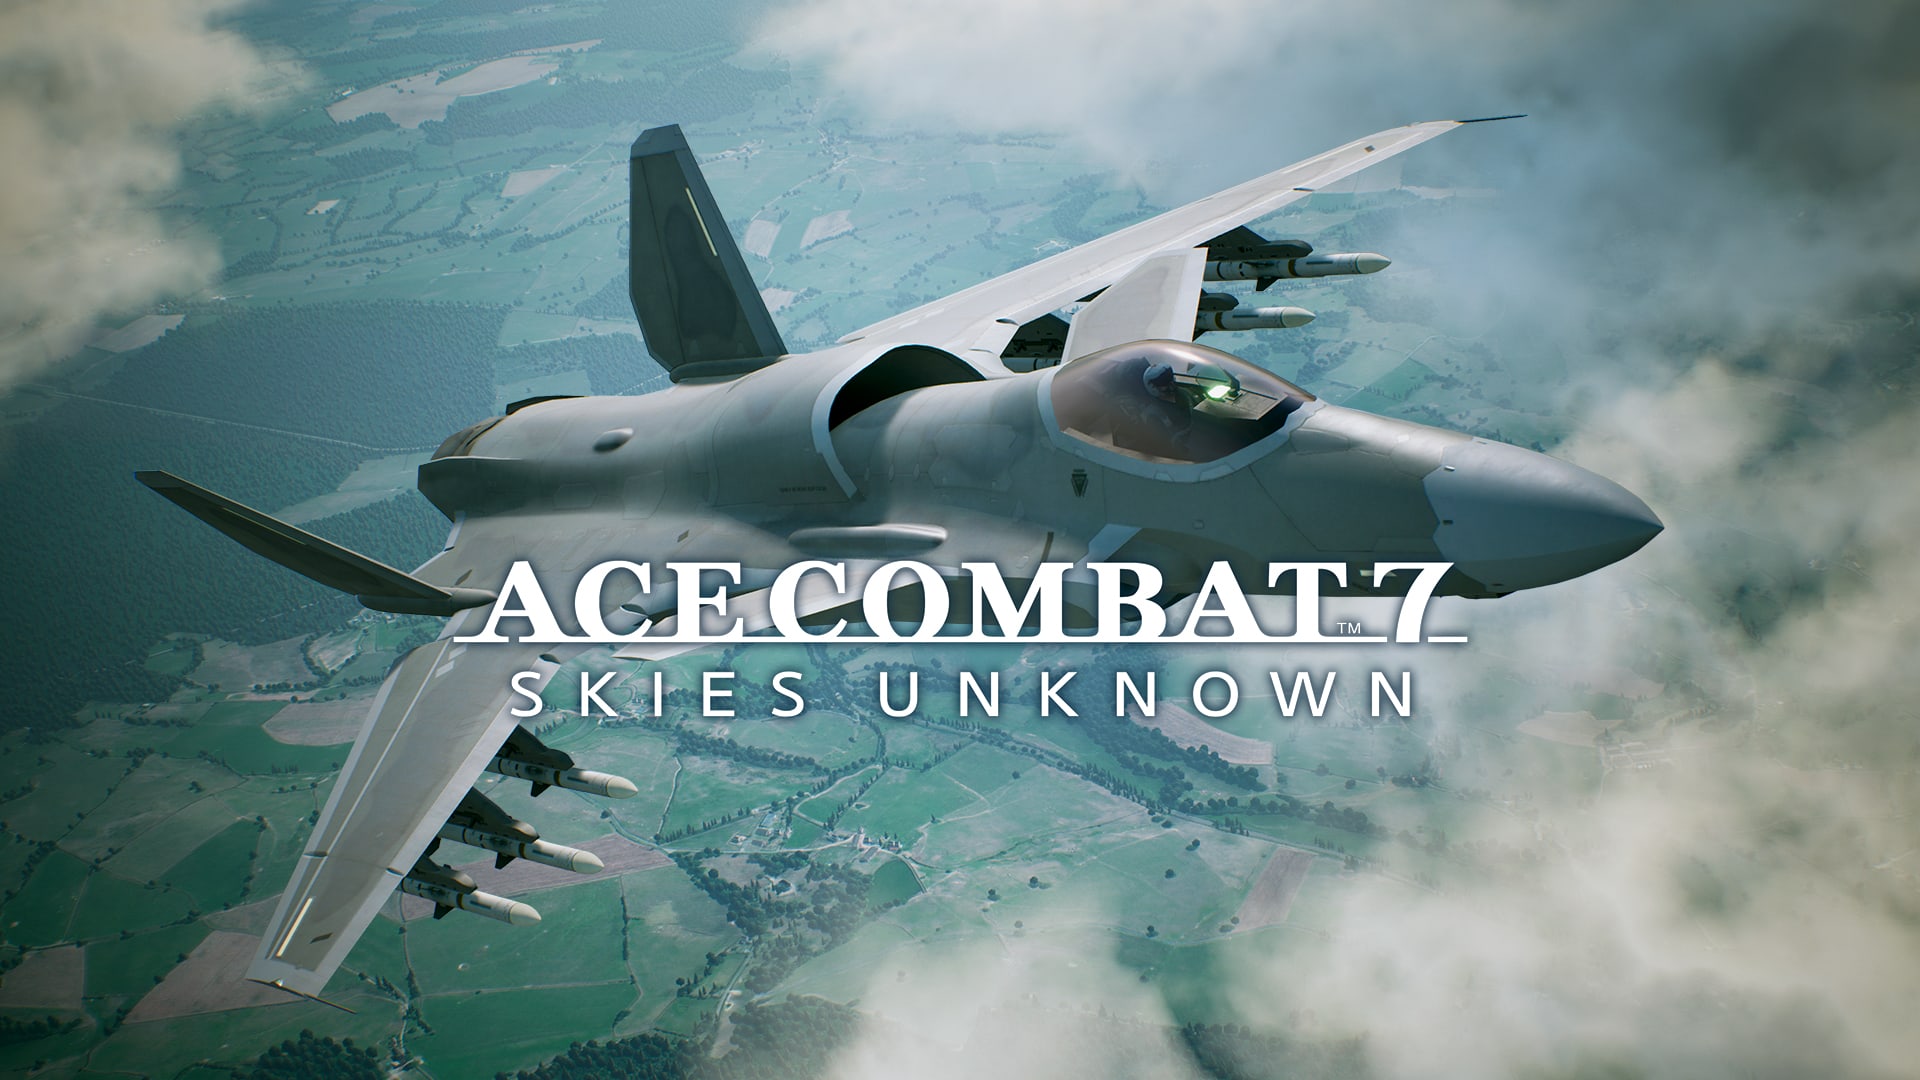 ACE COMBAT™7: SKIES UNKNOWN - Ensemble ASF-X Shinden II 1